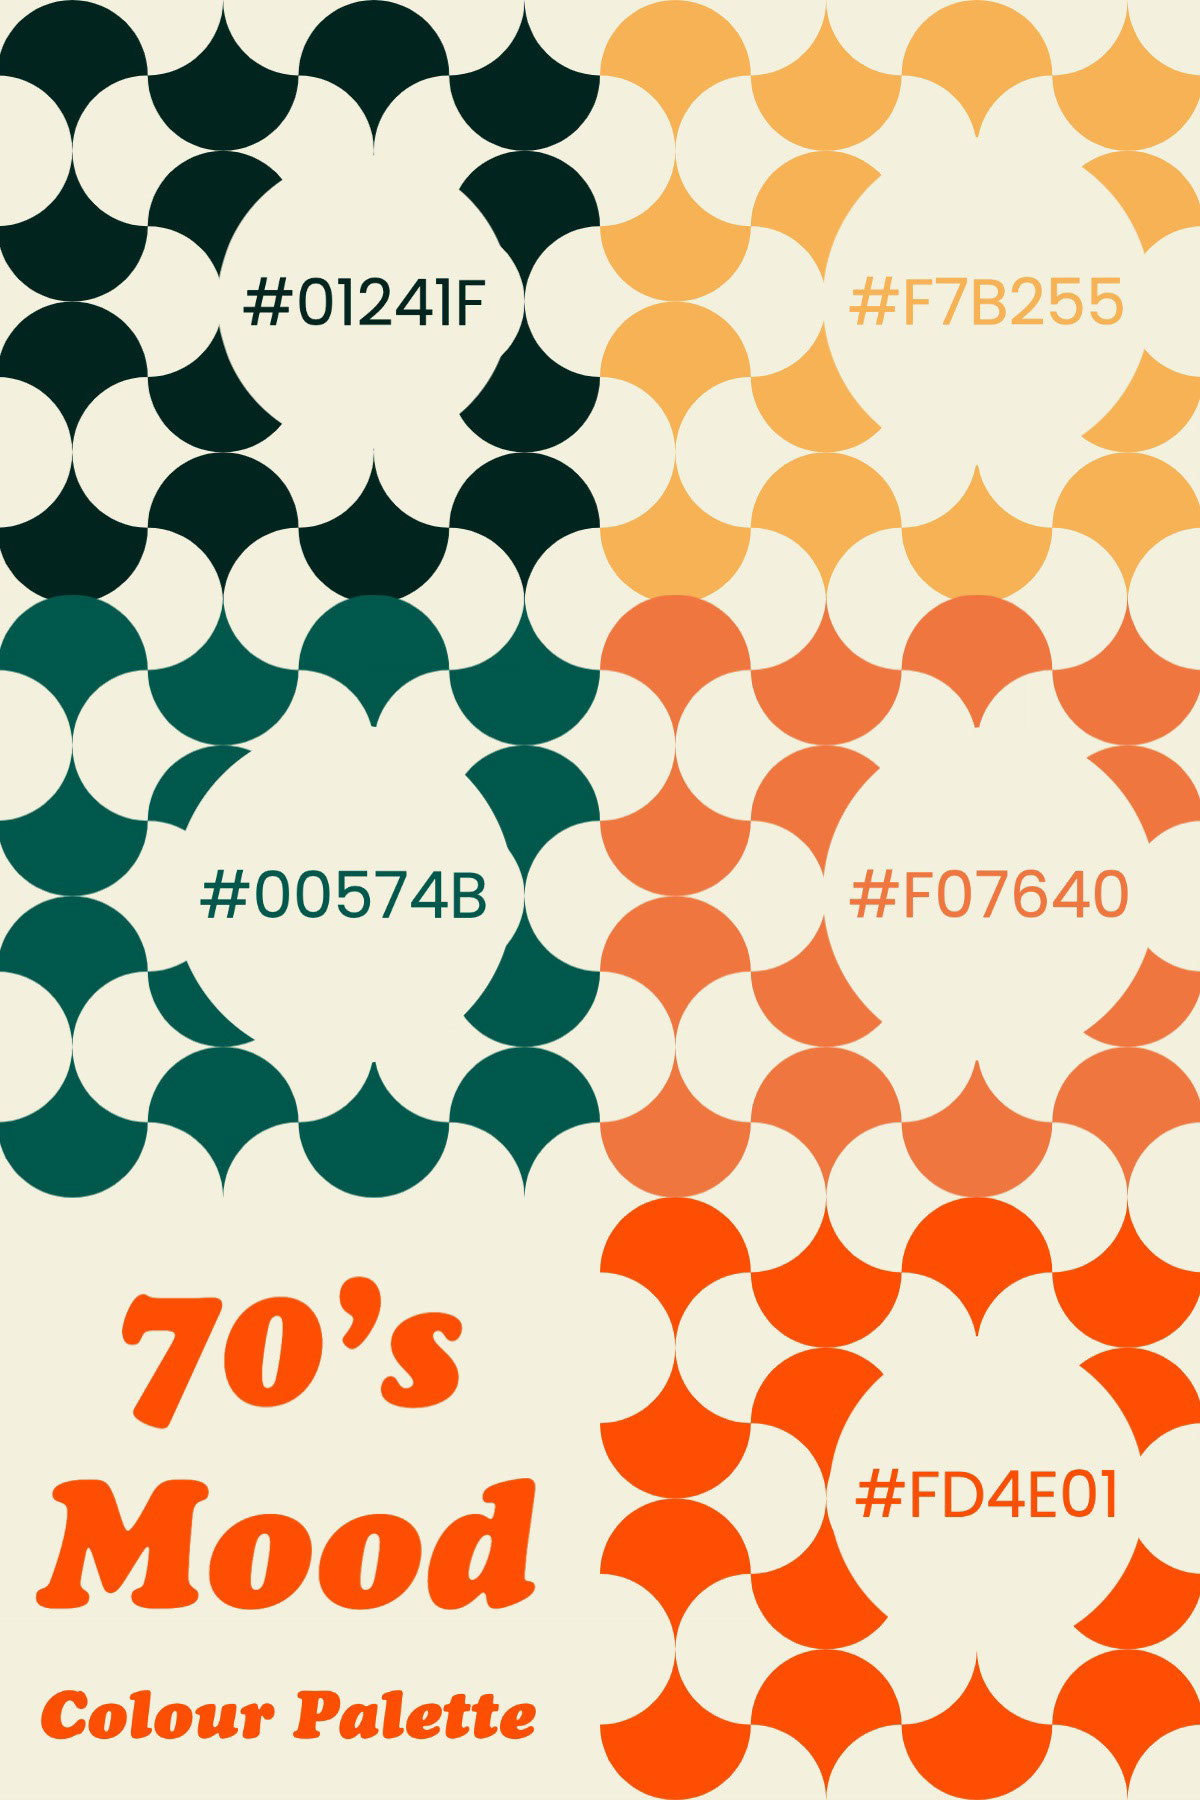 Orange Retro 70's Colour Palette Pinterest Post 70’s Mood #00574B #F07640 #F7B255 #FD4E01 Colour Palette #01241F